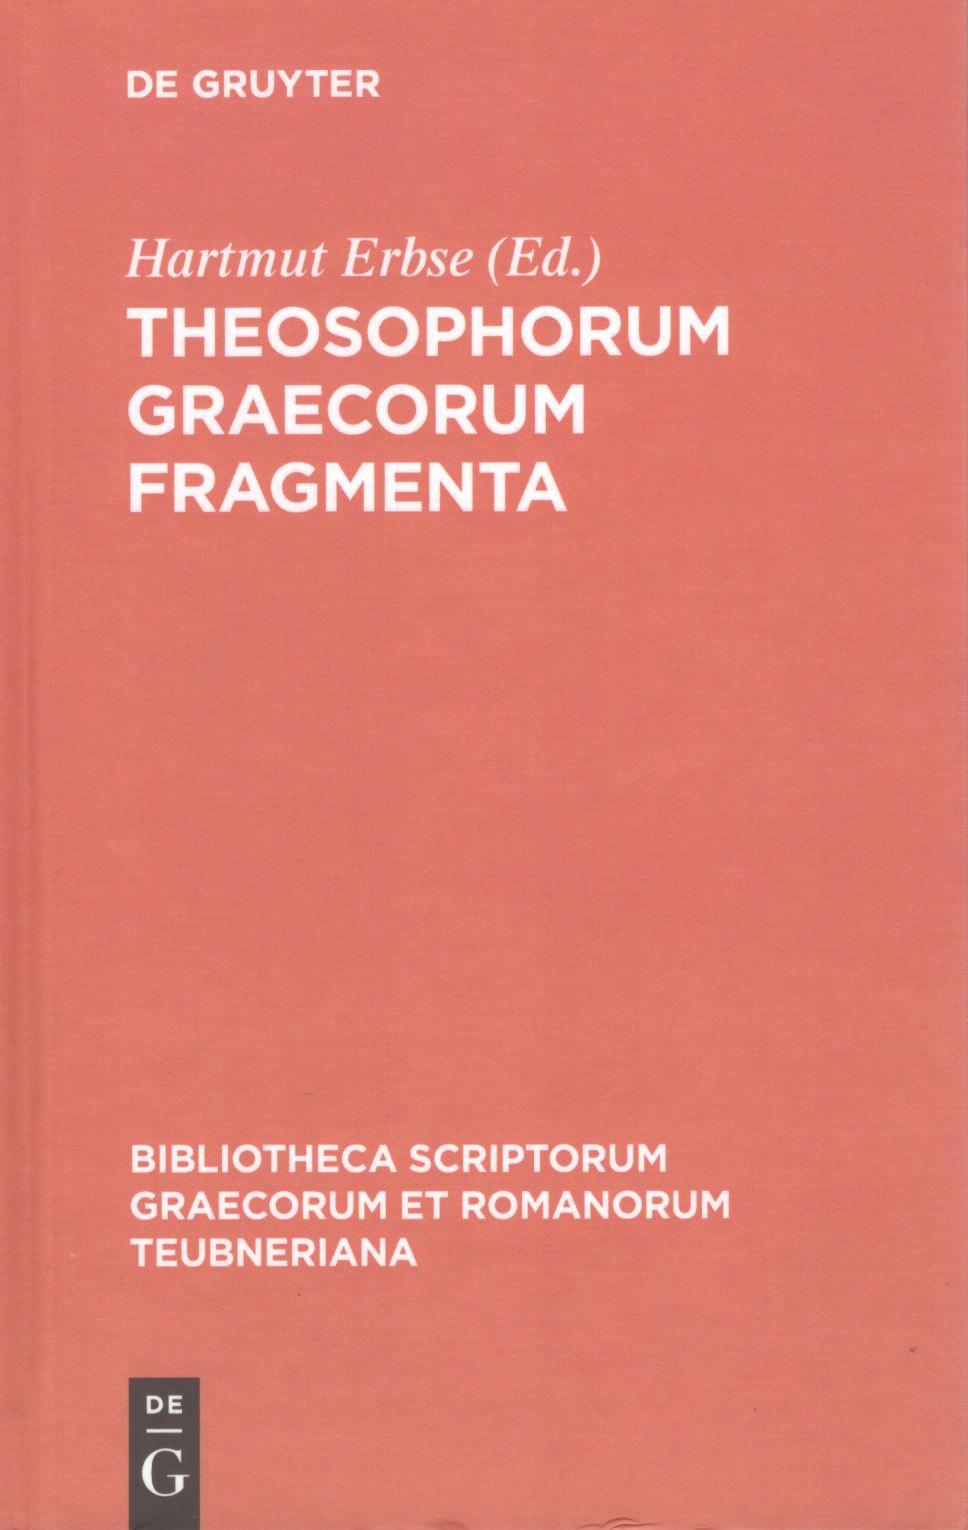 THEOSOPHORUM GRAECORUM FRAGMENTA